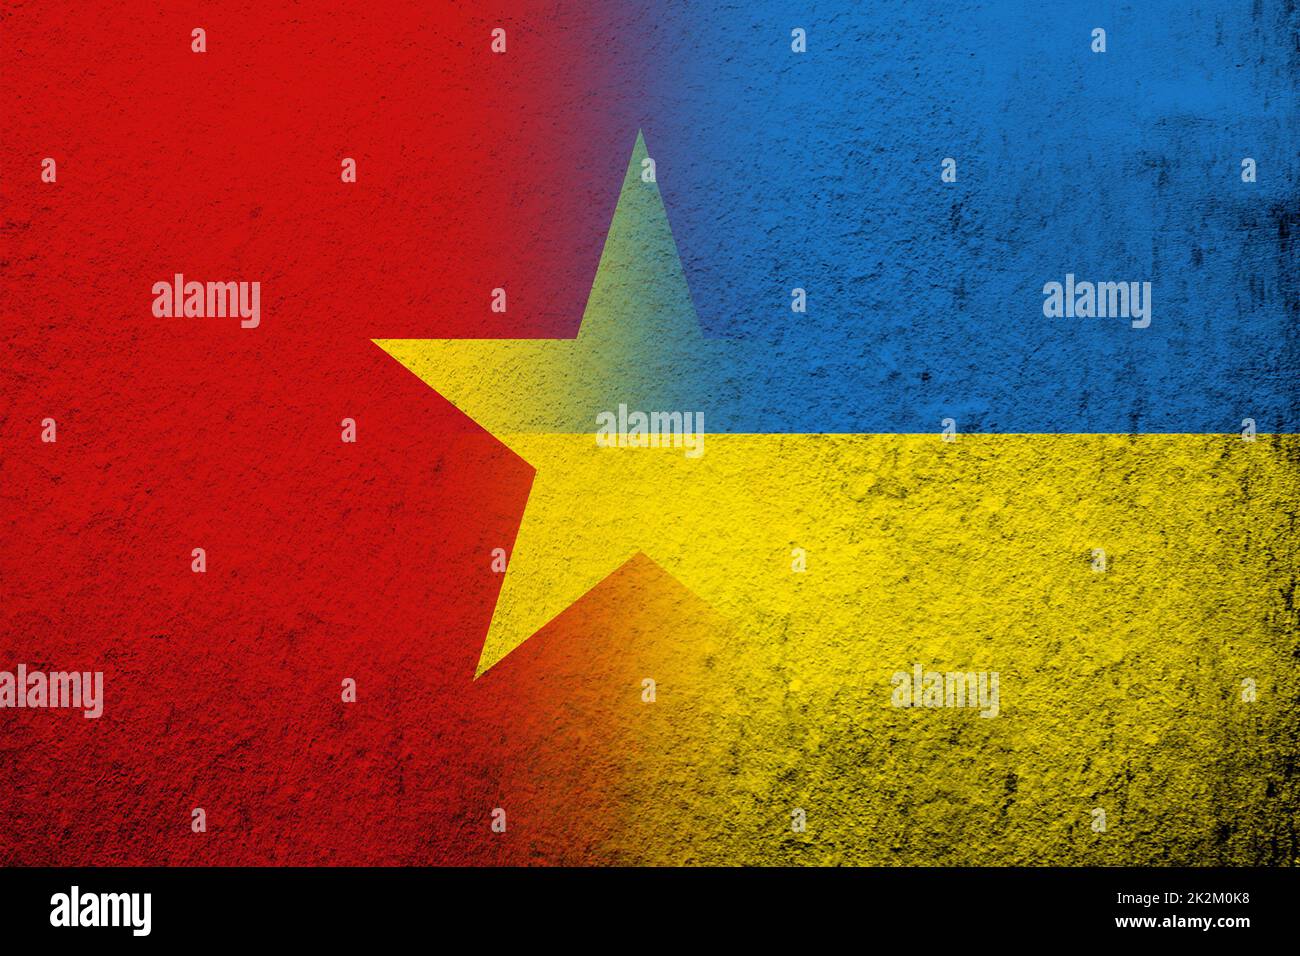 The Socialist Republic of Vietnam National flag with National flag of Ukraine. Grunge background Stock Photo